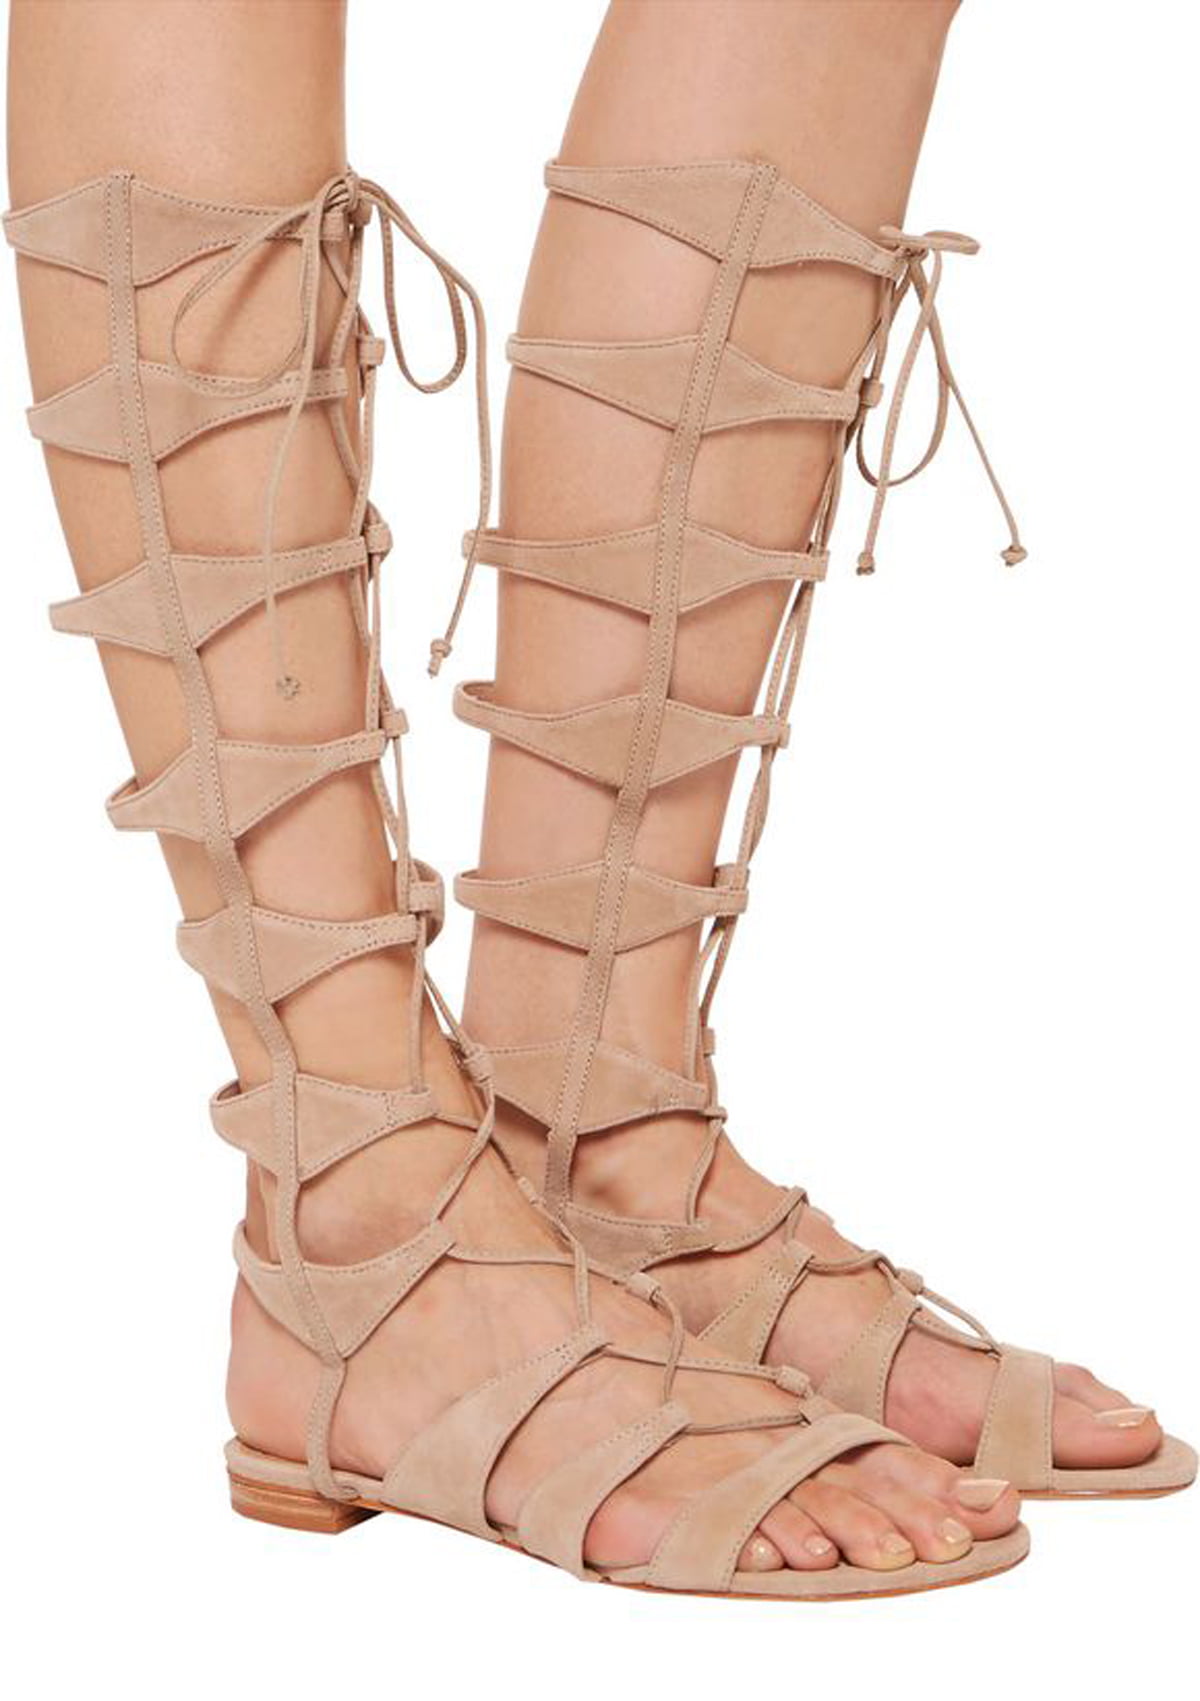 Inform In advance convenience Schutz Shyla Tanino Nude Nubuck Lace Up Beige Suede Tall Gladiator Sandals  (5) - Walmart.com